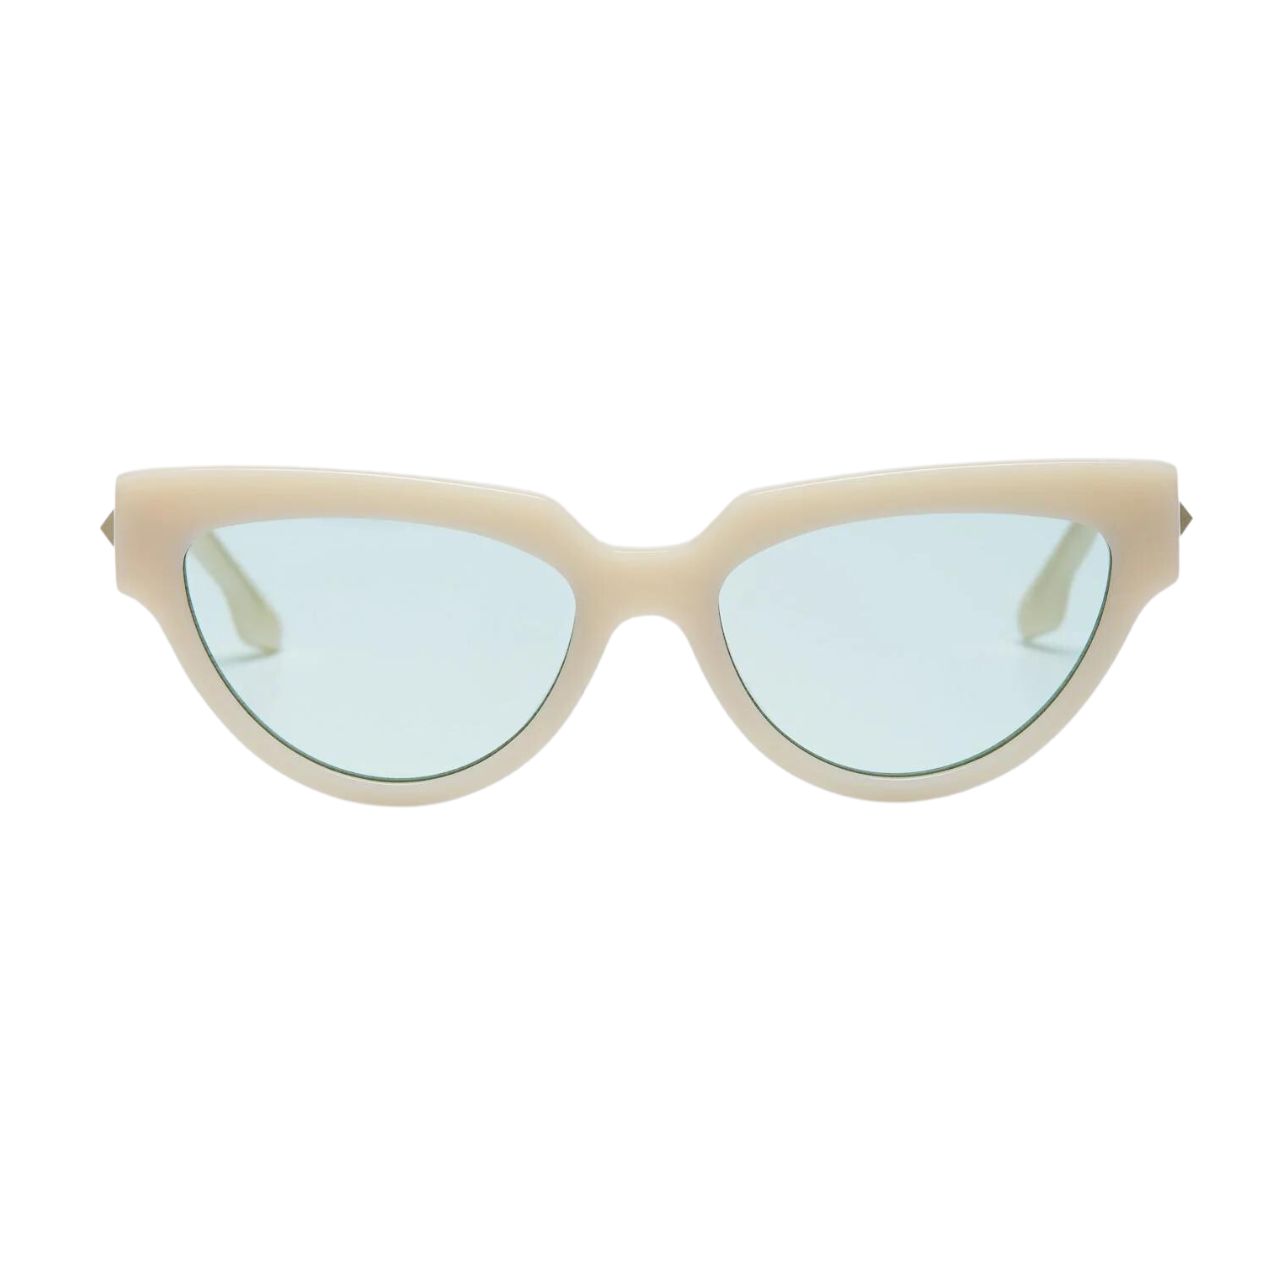 Scanlan Theodore pearl cat eye sunglasses with blue tonal lenses